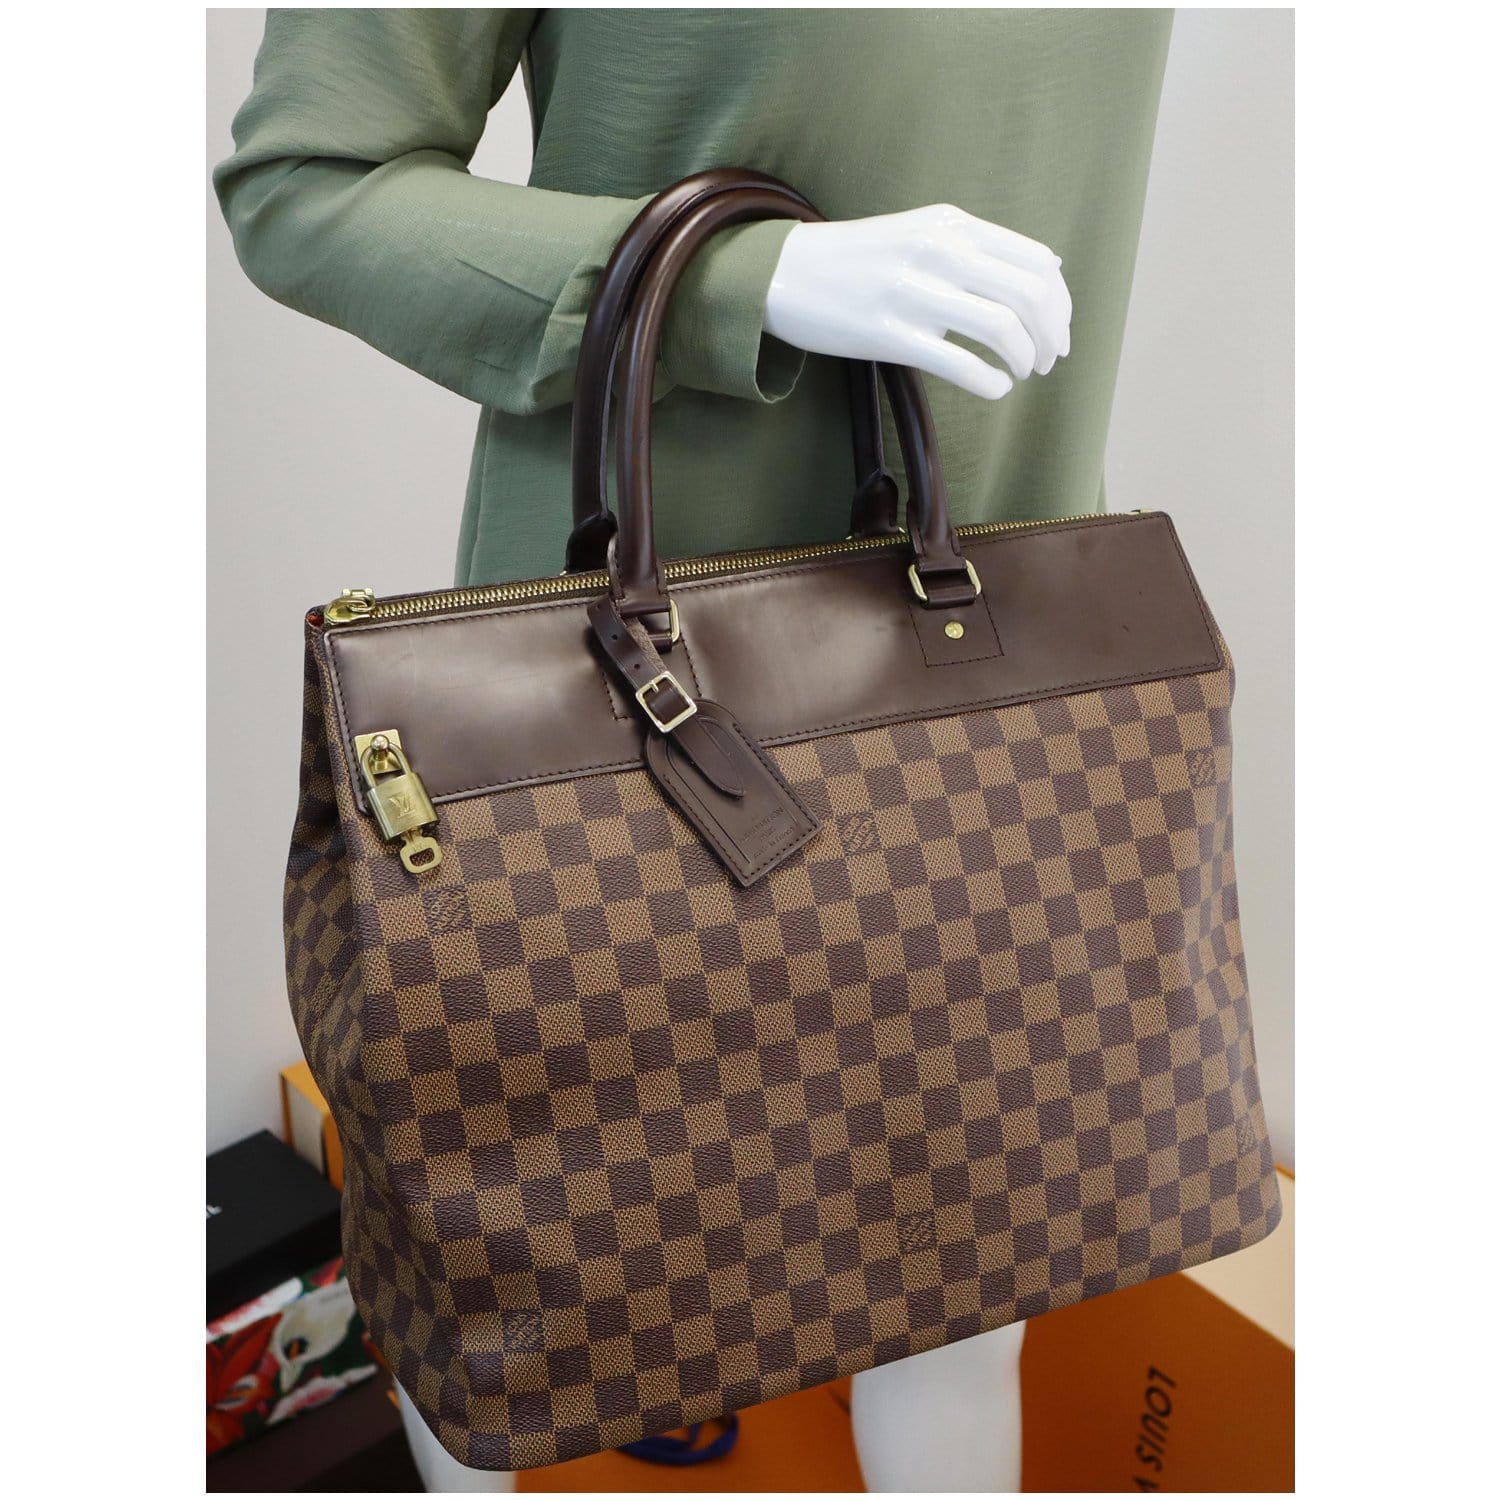 Louis Vuitton Greenwich Travel Bag Damier PM Brown Large Duffle